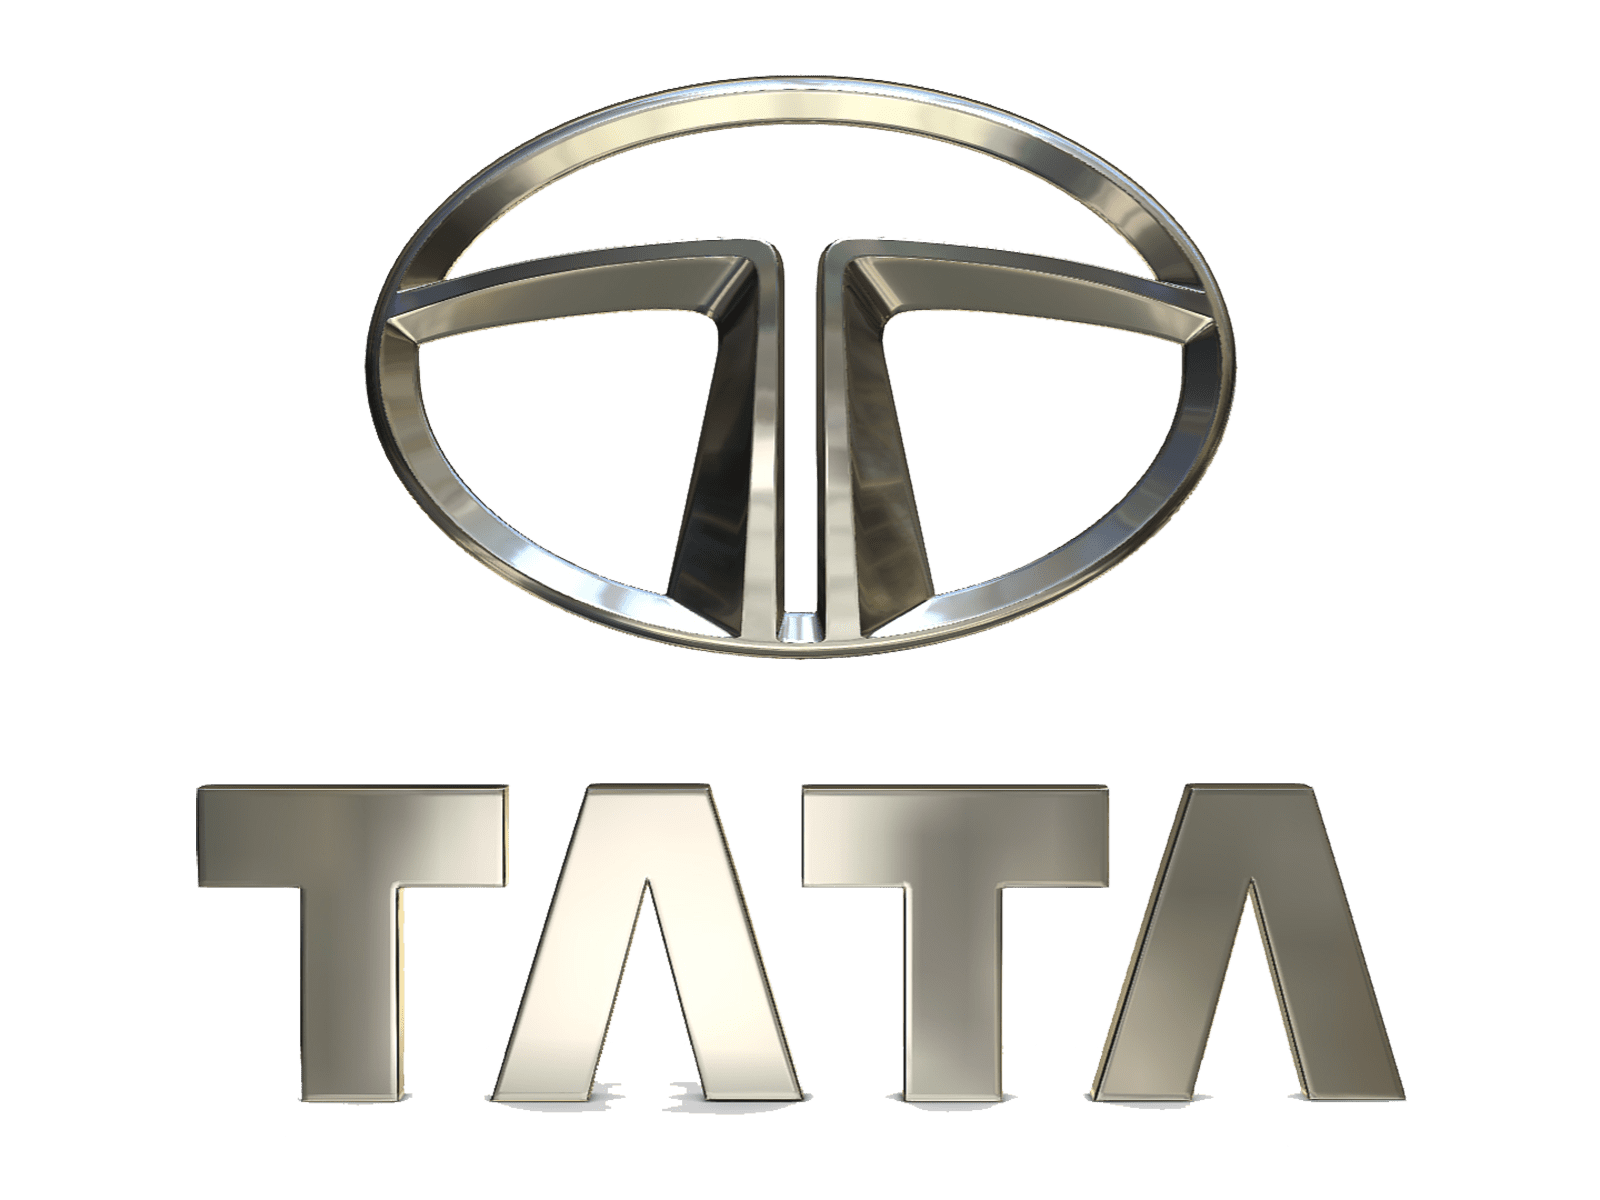 Tata Logo Wallpapers Top Free Tata Logo Backgrounds WallpaperAccess